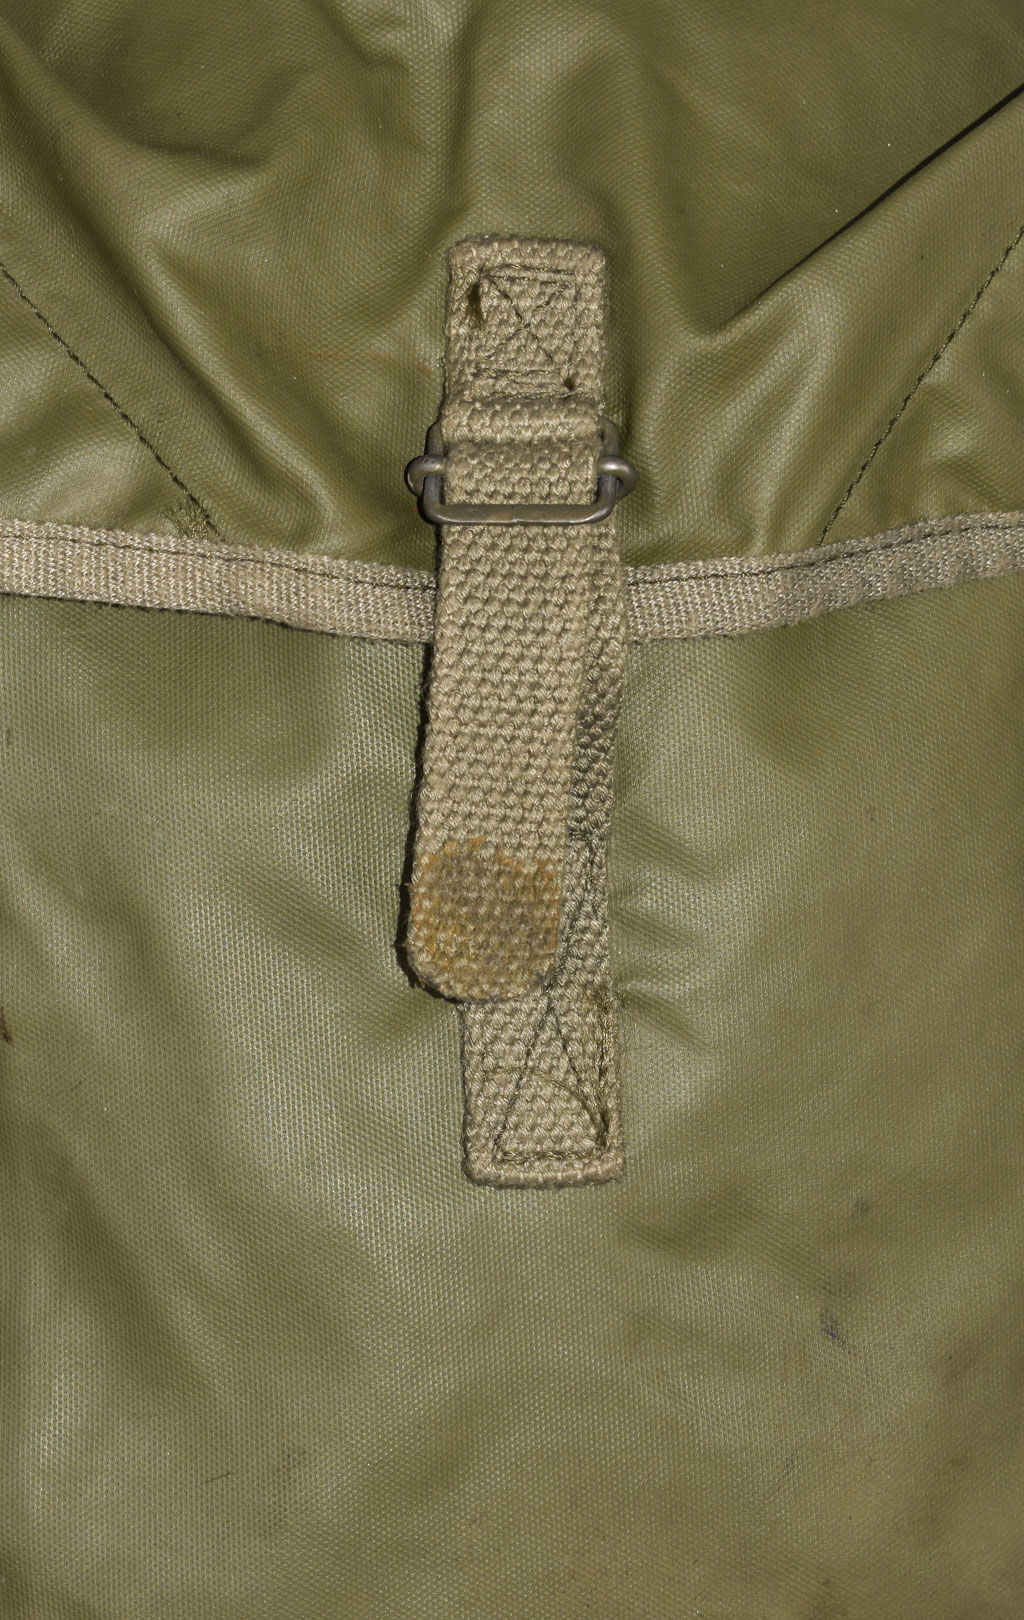 Ранец армейский с боковыми карманами olive б/у Франция